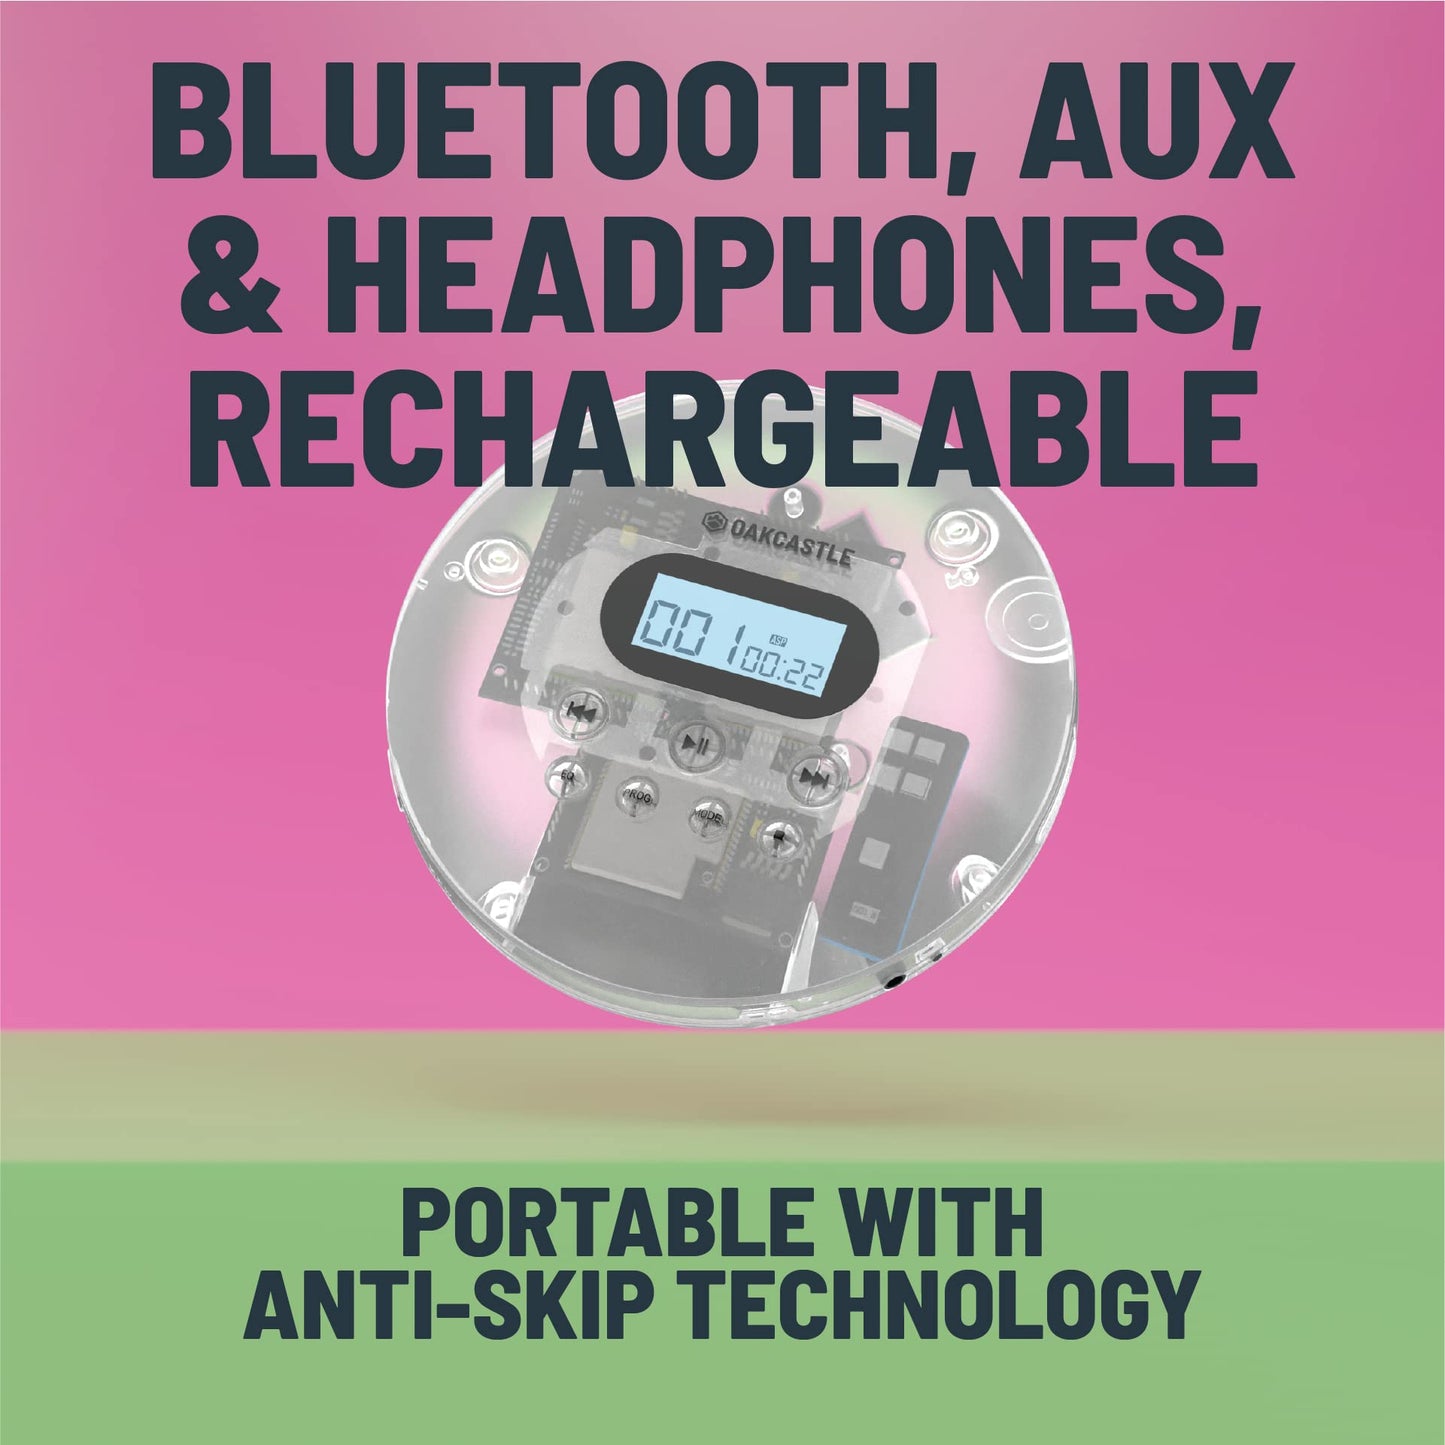 Majority Oakcastle CD100 Bluetooth Portable CD Player - Clear